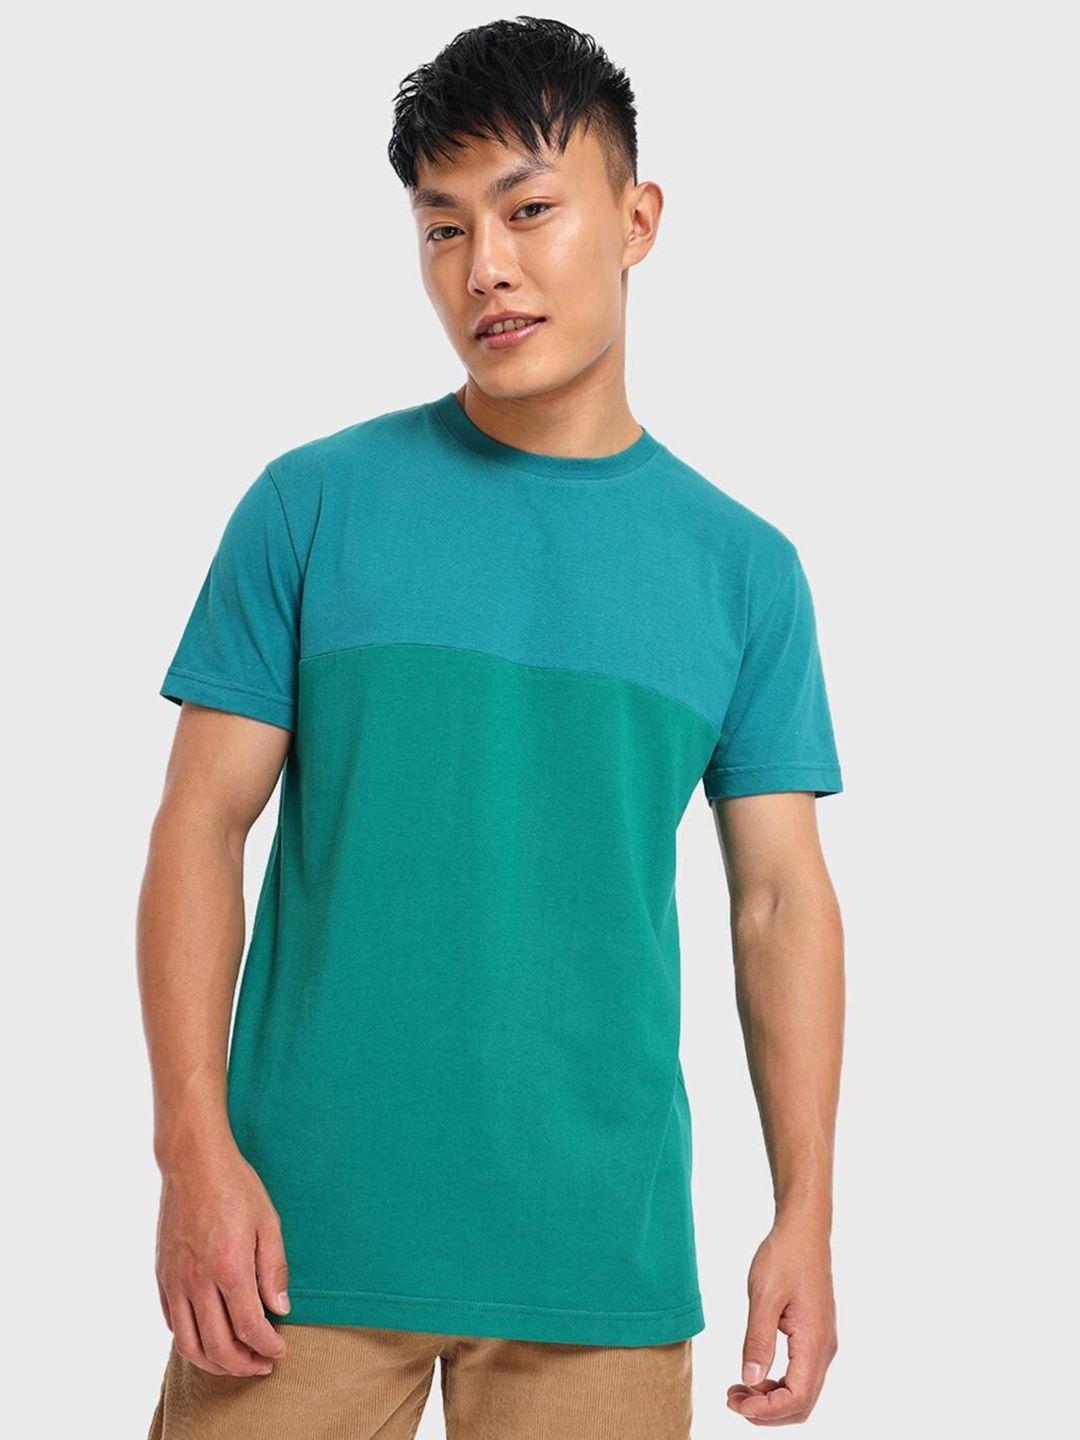 bewakoof men turquoise blue colourblocked cotton t-shirt